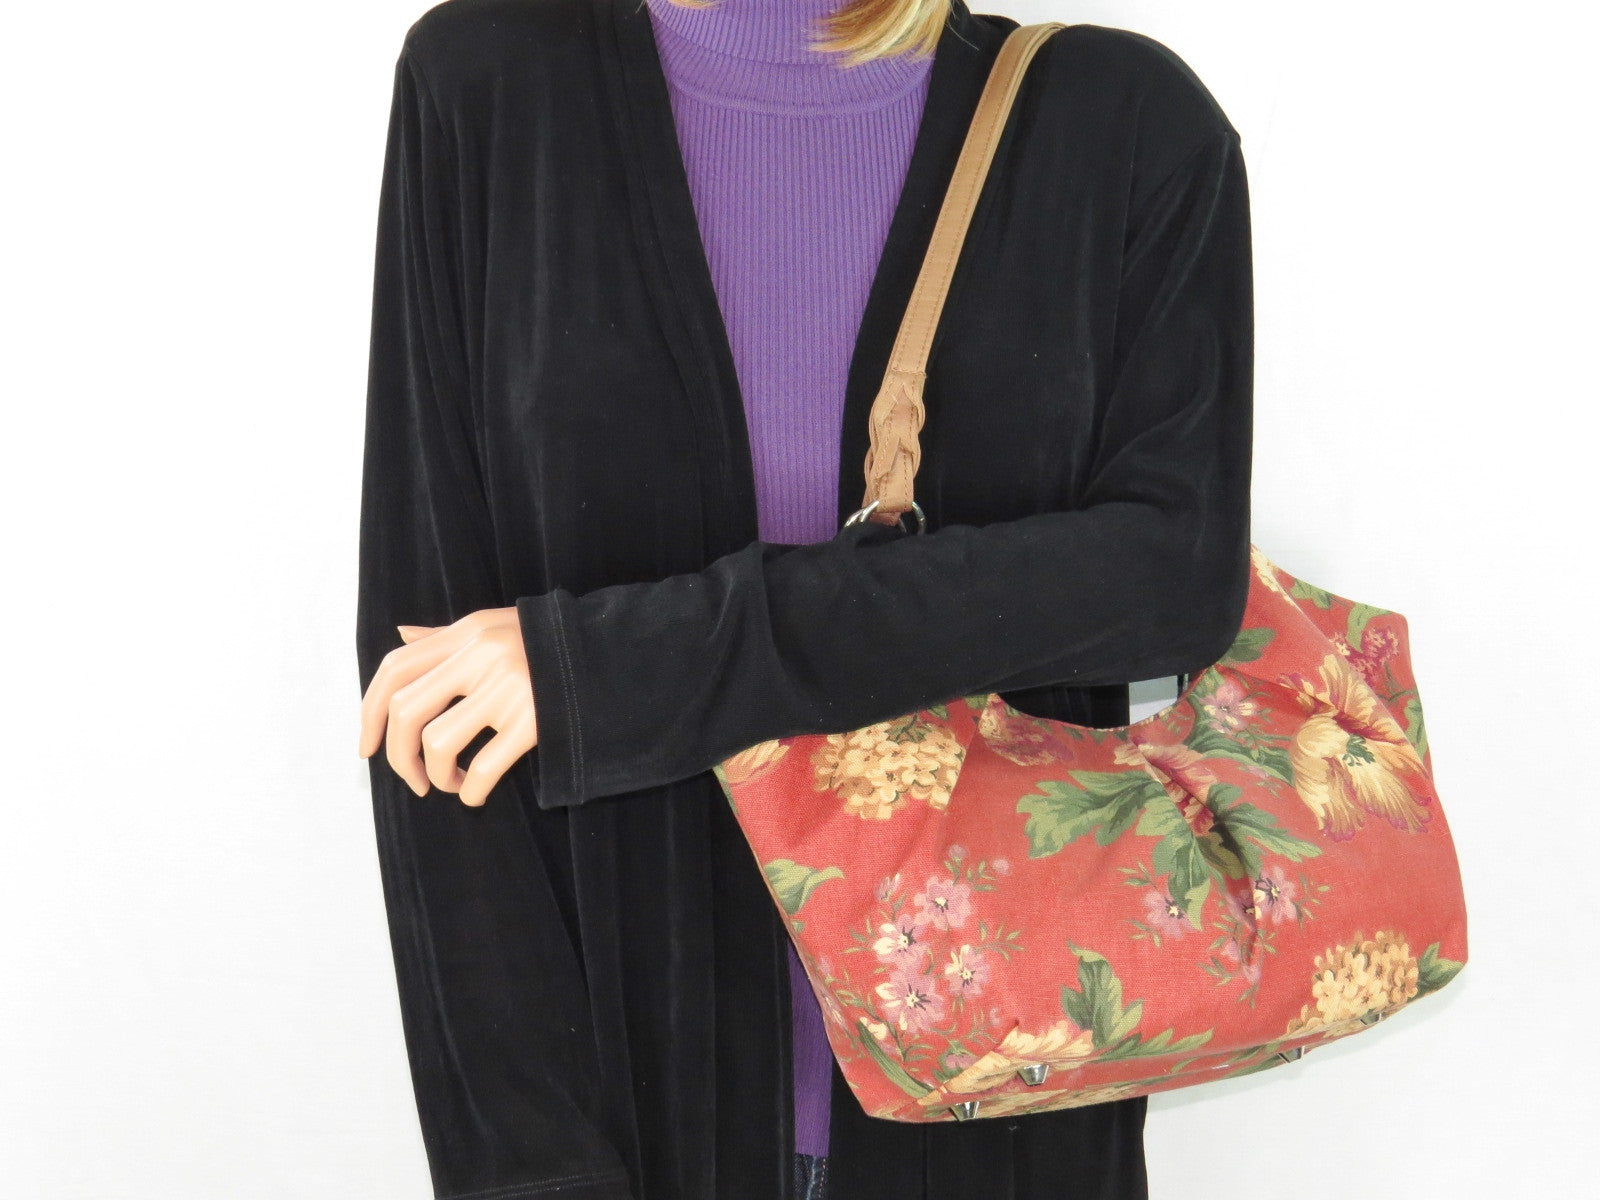 Autumn Floral Print on Canvas Tote Style Handbag on model